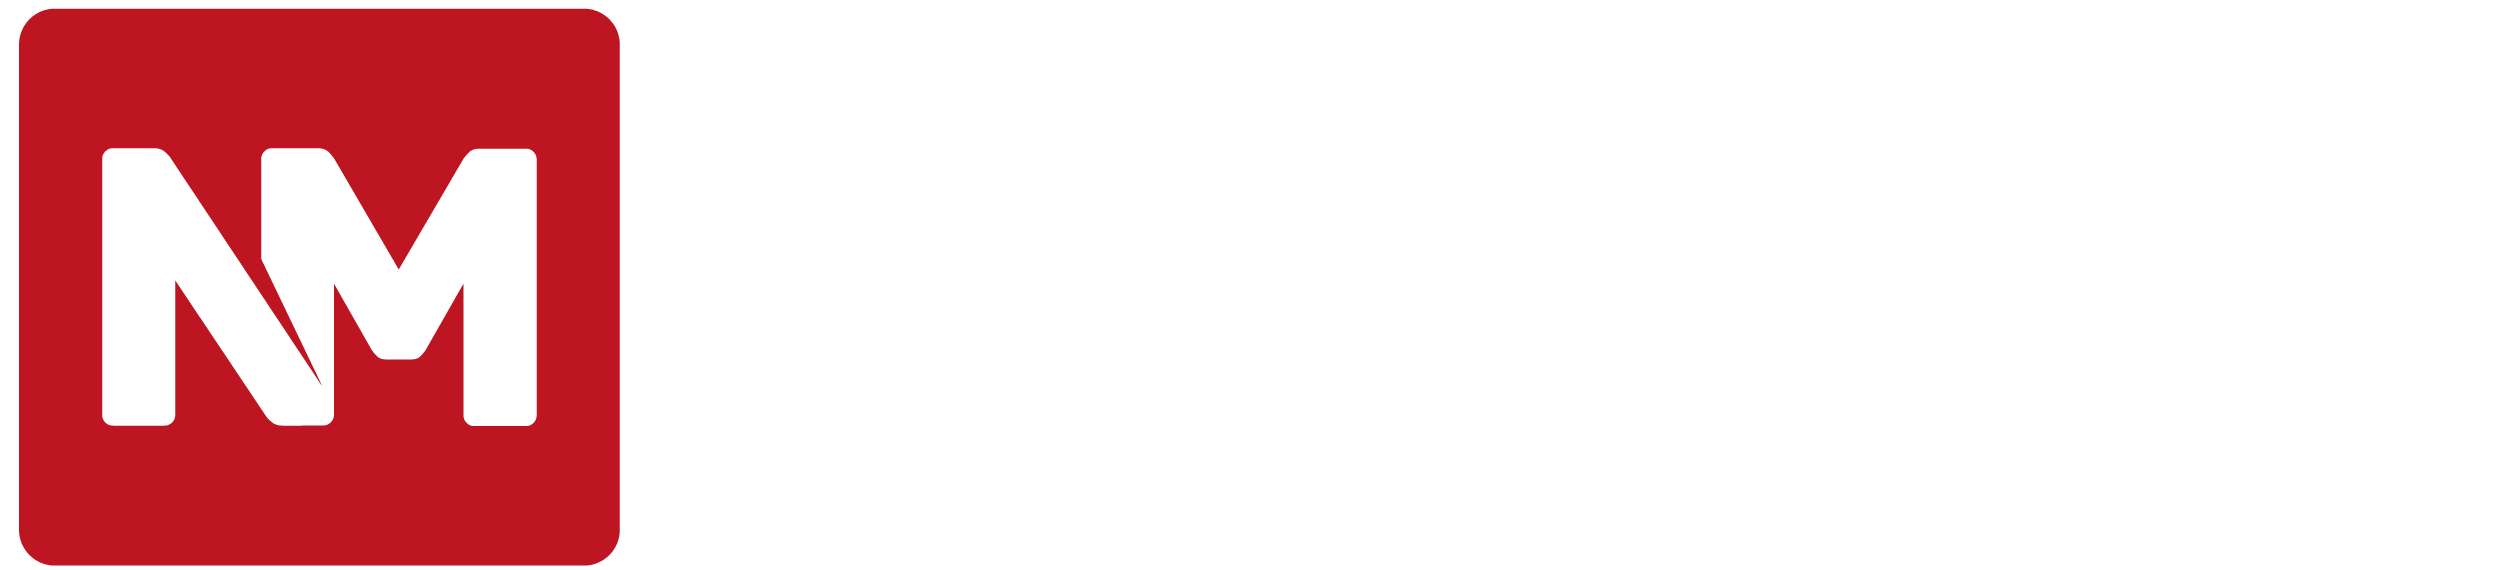 National Media